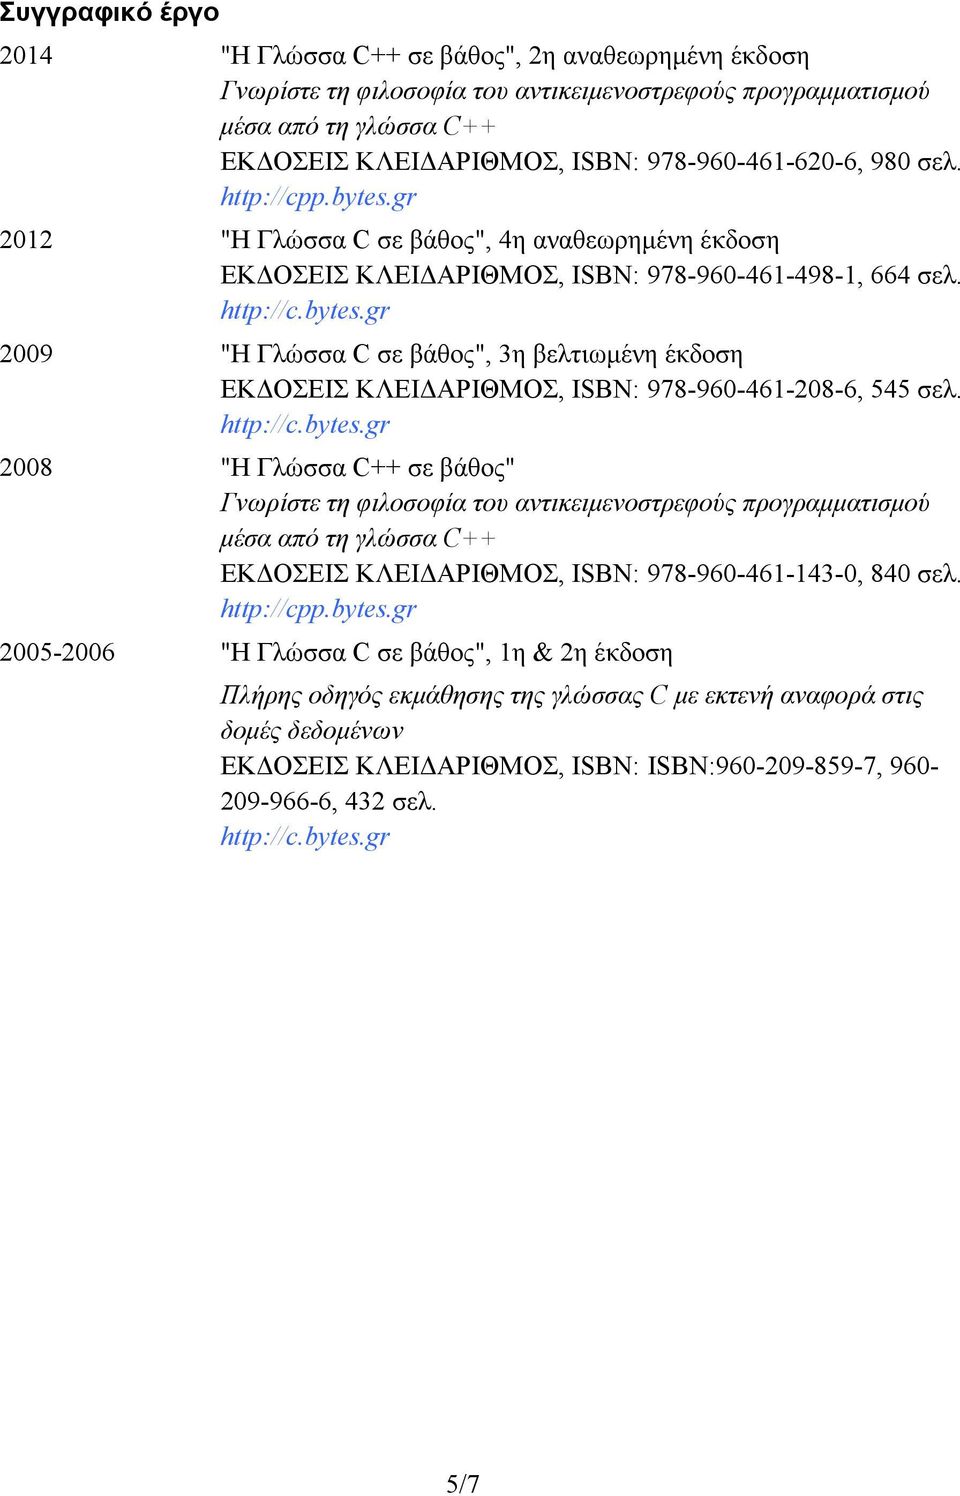 http://c.bytes.gr 2008 "Η Γλώσσα C++ σε βάθος" Γνωρίστε τη φιλοσοφία του αντικειµενοστρεφούς προγραµµατισµού µέσα από τη γλώσσα C++ ΕΚ ΟΣΕΙΣ ΚΛΕΙ ΑΡΙΘΜΟΣ, ISBN: 978-960-461-143-0, 840 σελ. http://cpp.